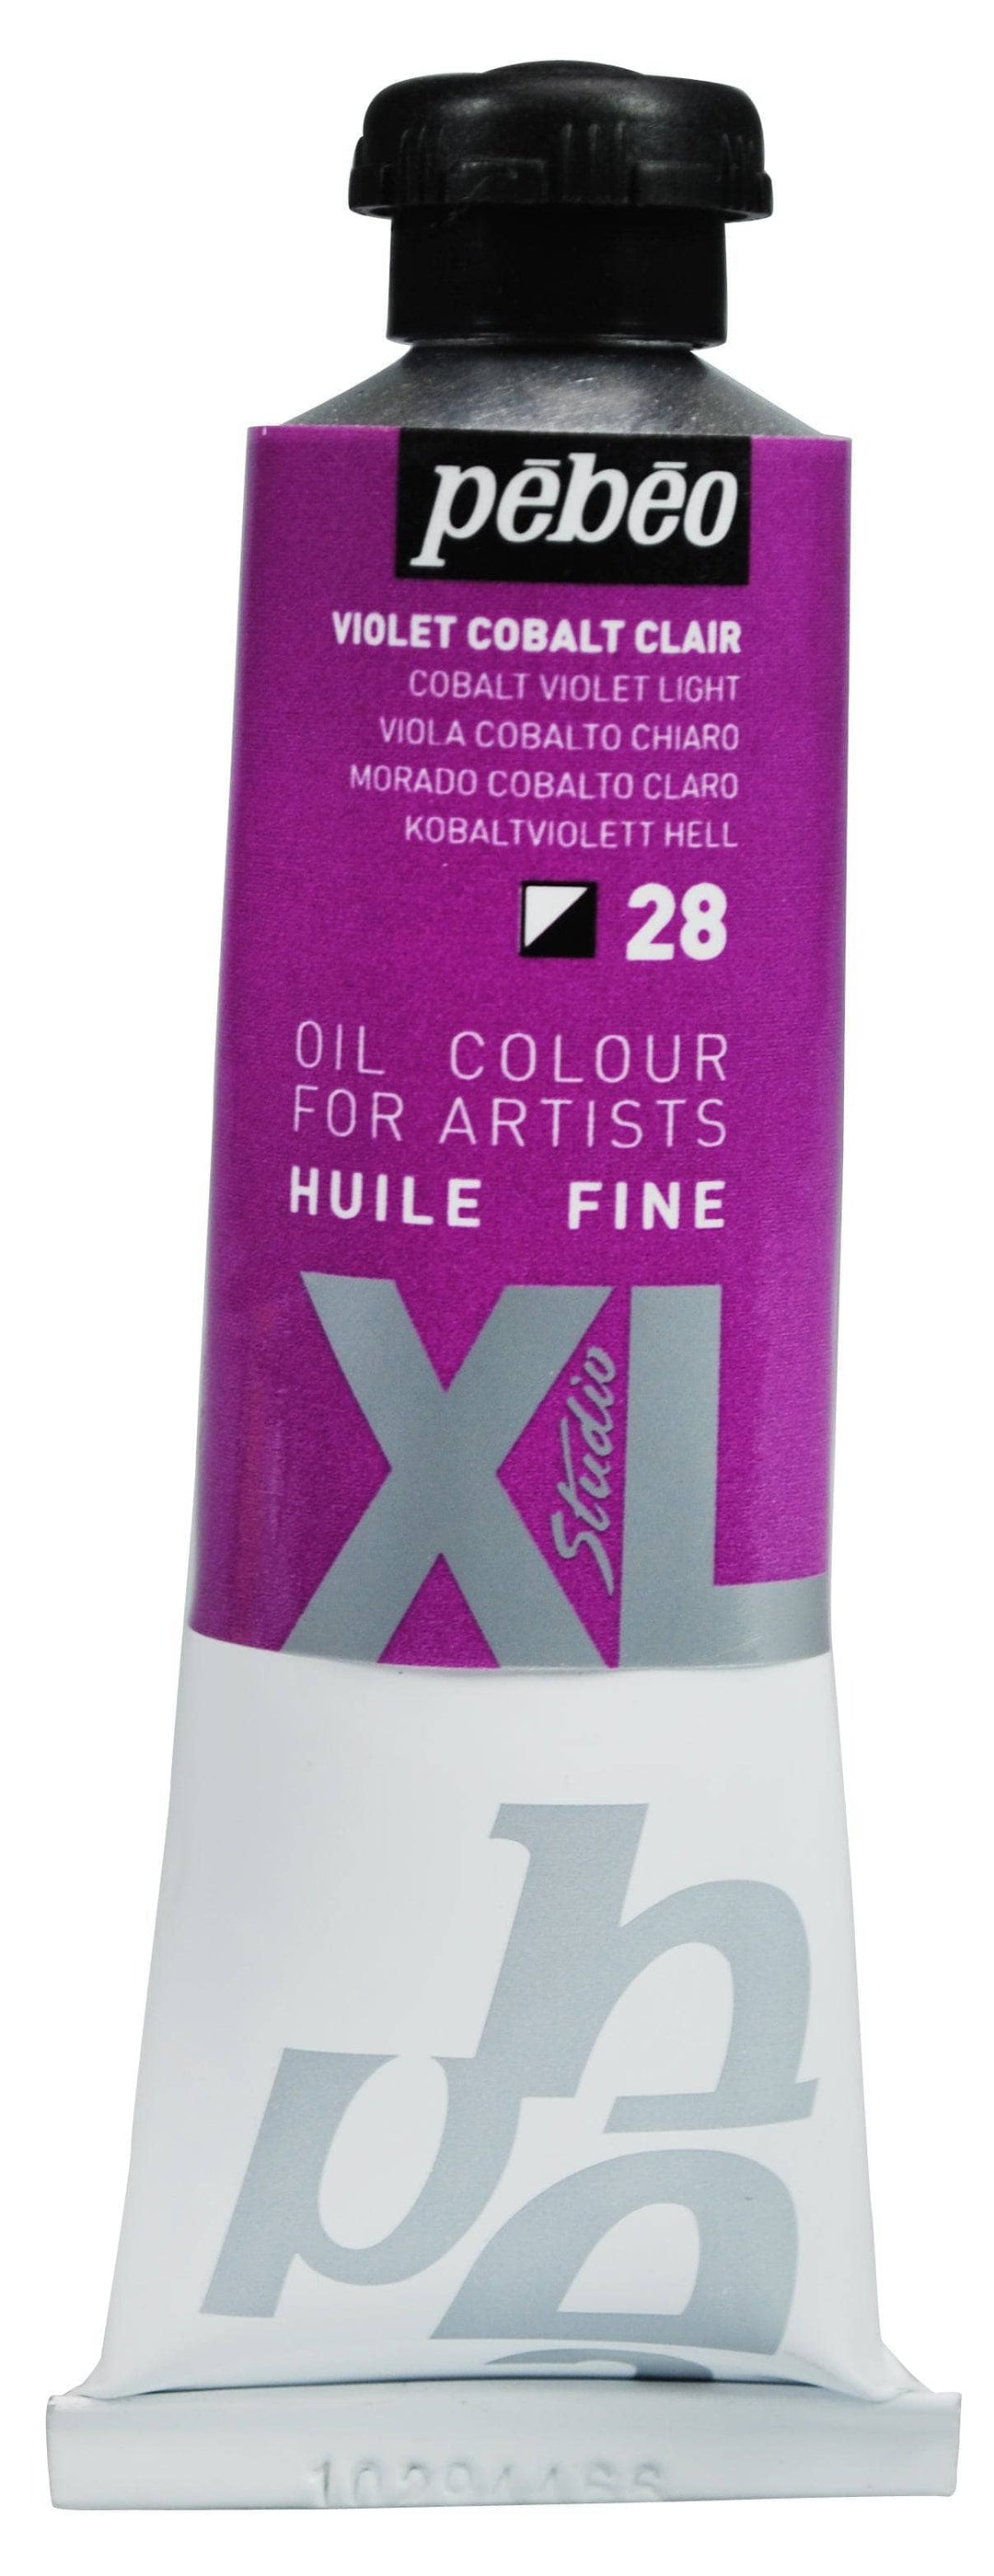 Huile fine Studio XL 37ml - Violet Cobalt Clair
PB937028